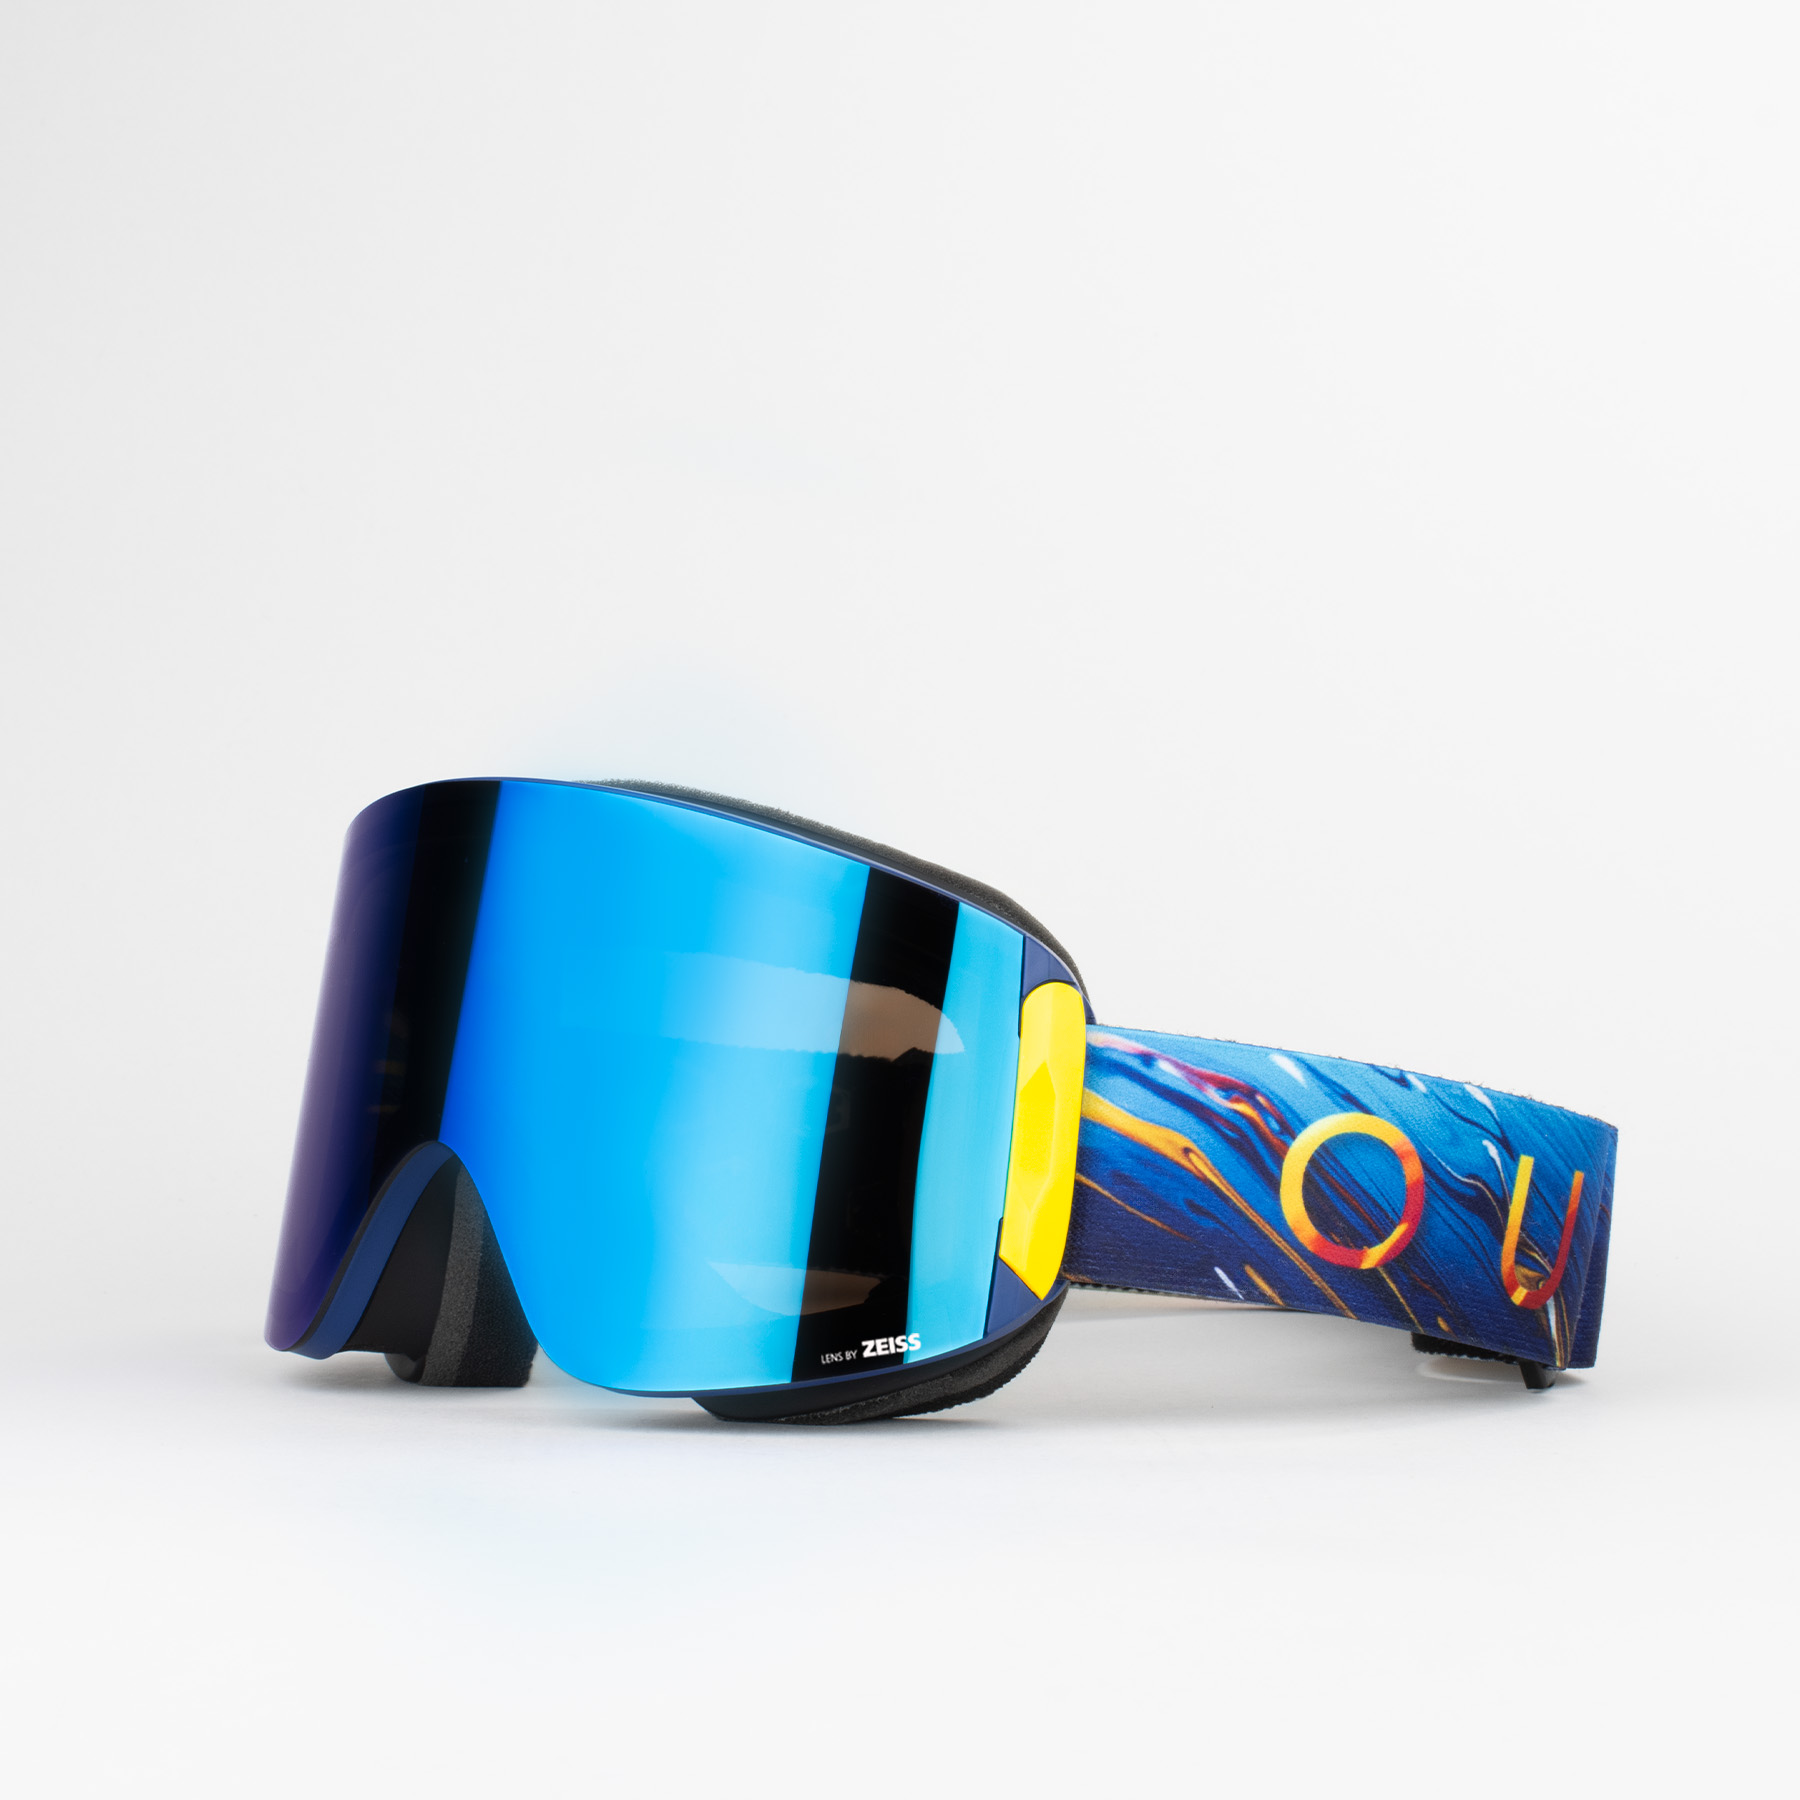 Katana Atmosphere snow goggle with Blue MCI lens and Storm bonus lens